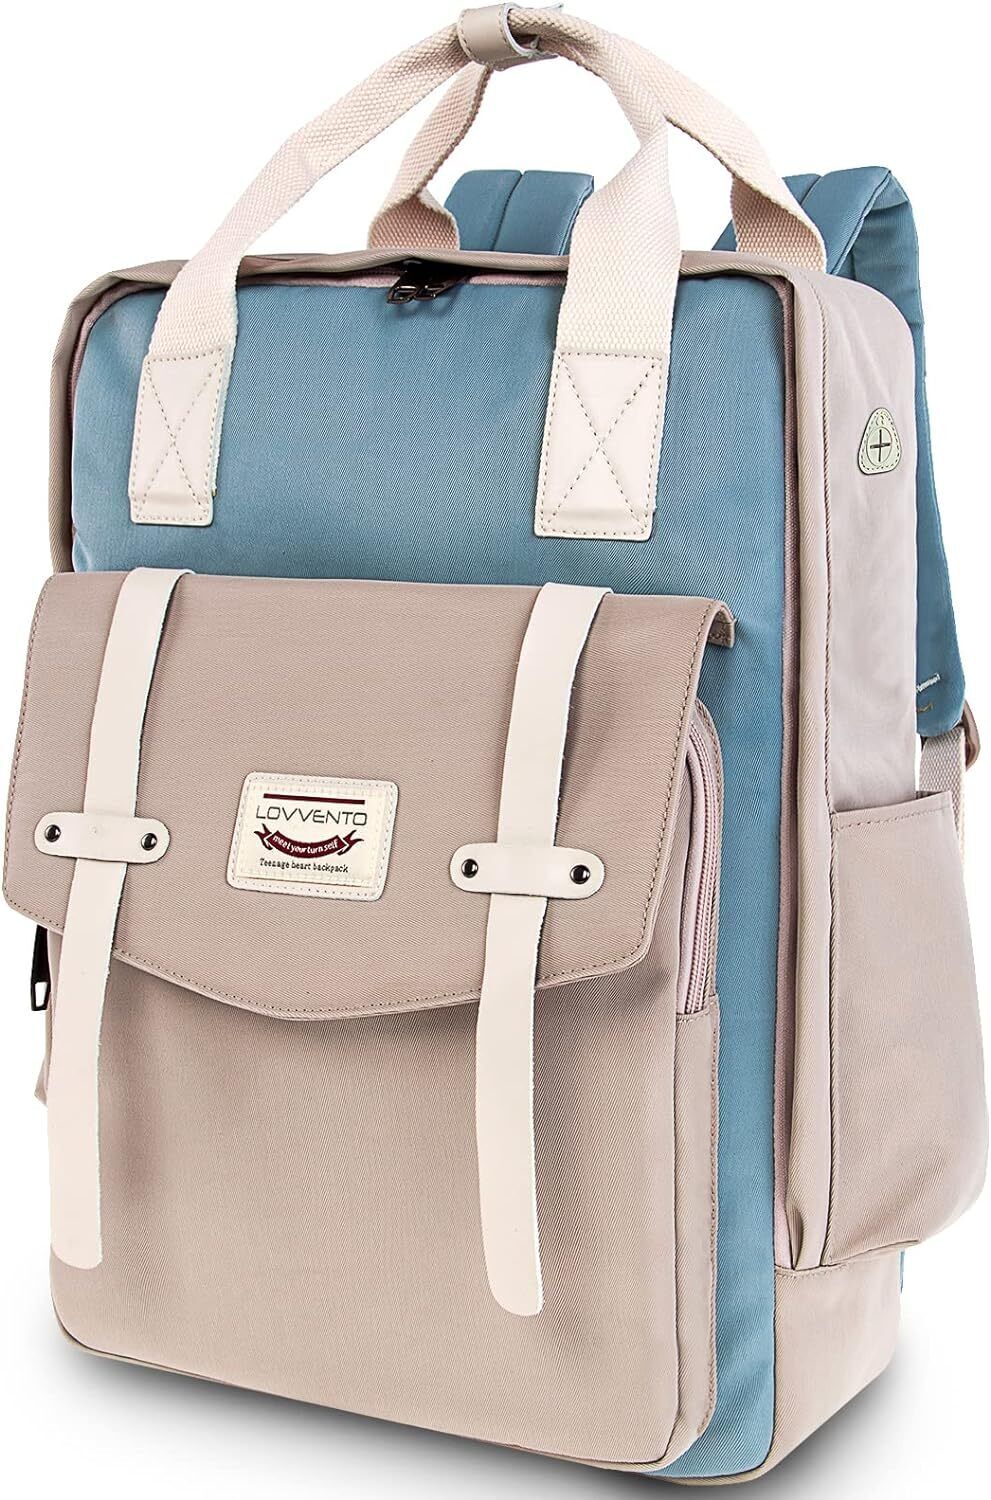 Lovvento 15.6 inch Laptop Japanese Backpack Travel Bag College 1-beige 